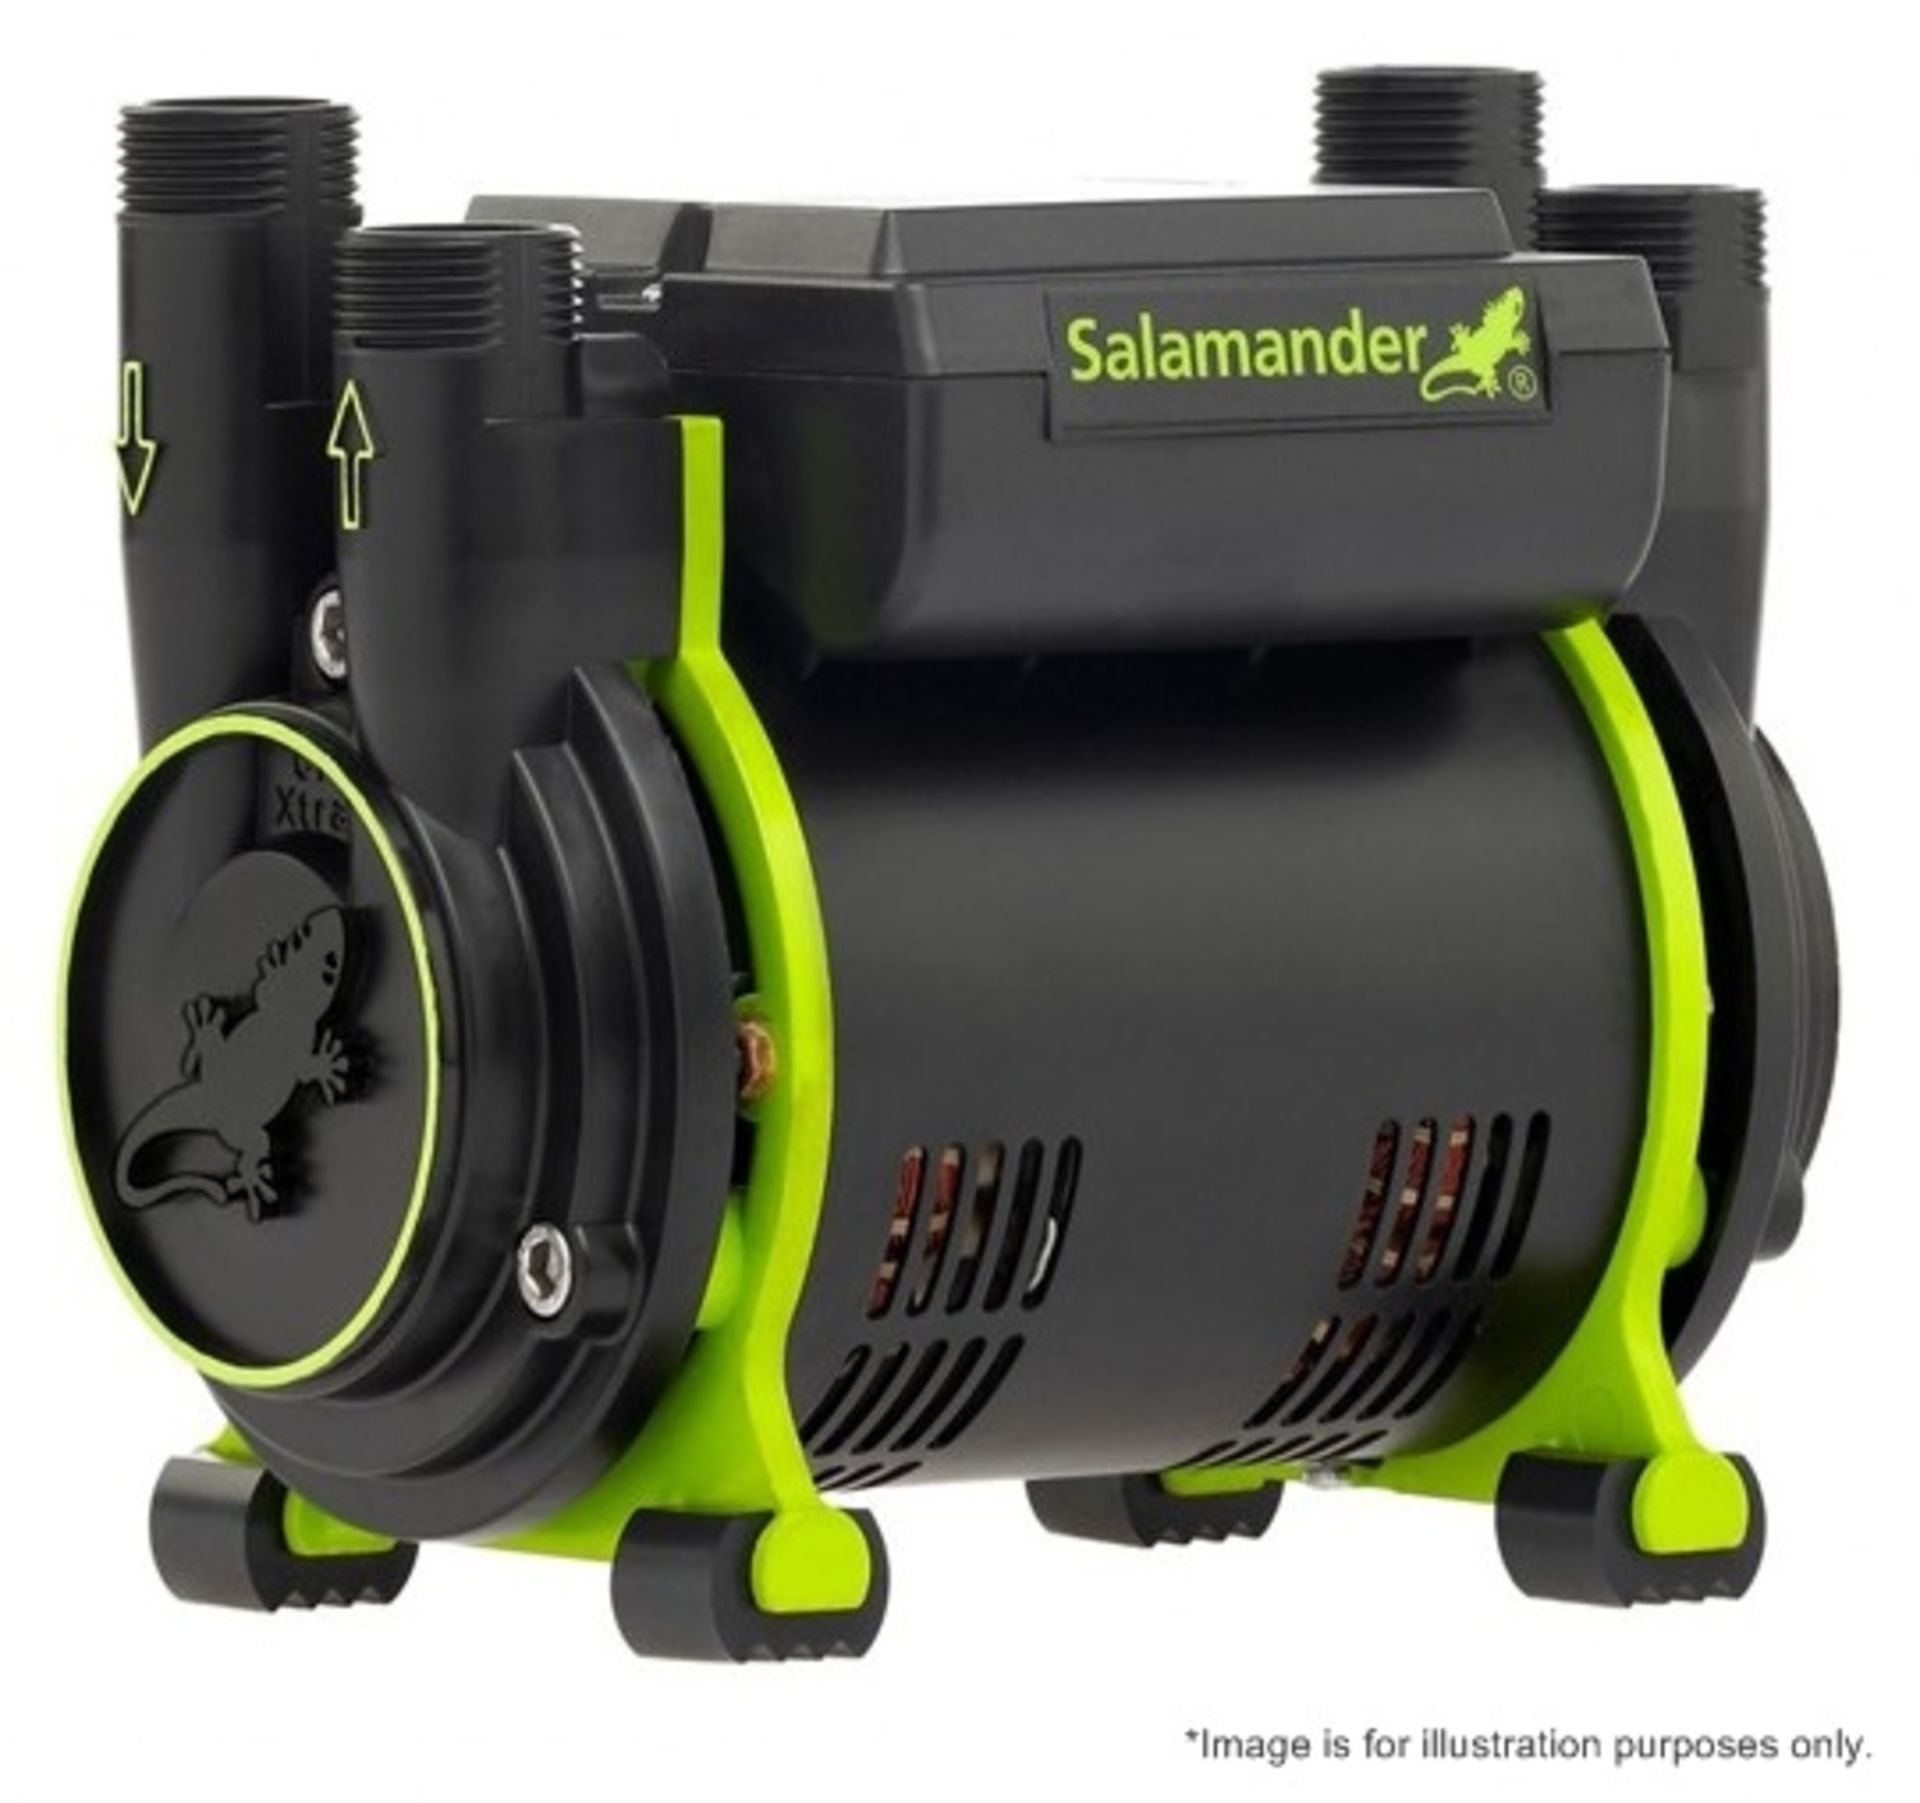 1 x Salamander CT75 Xtra 2.0 Bar Twin Positive Shower Pump - Ref: MBI017 - CL190 - Unused Boxed